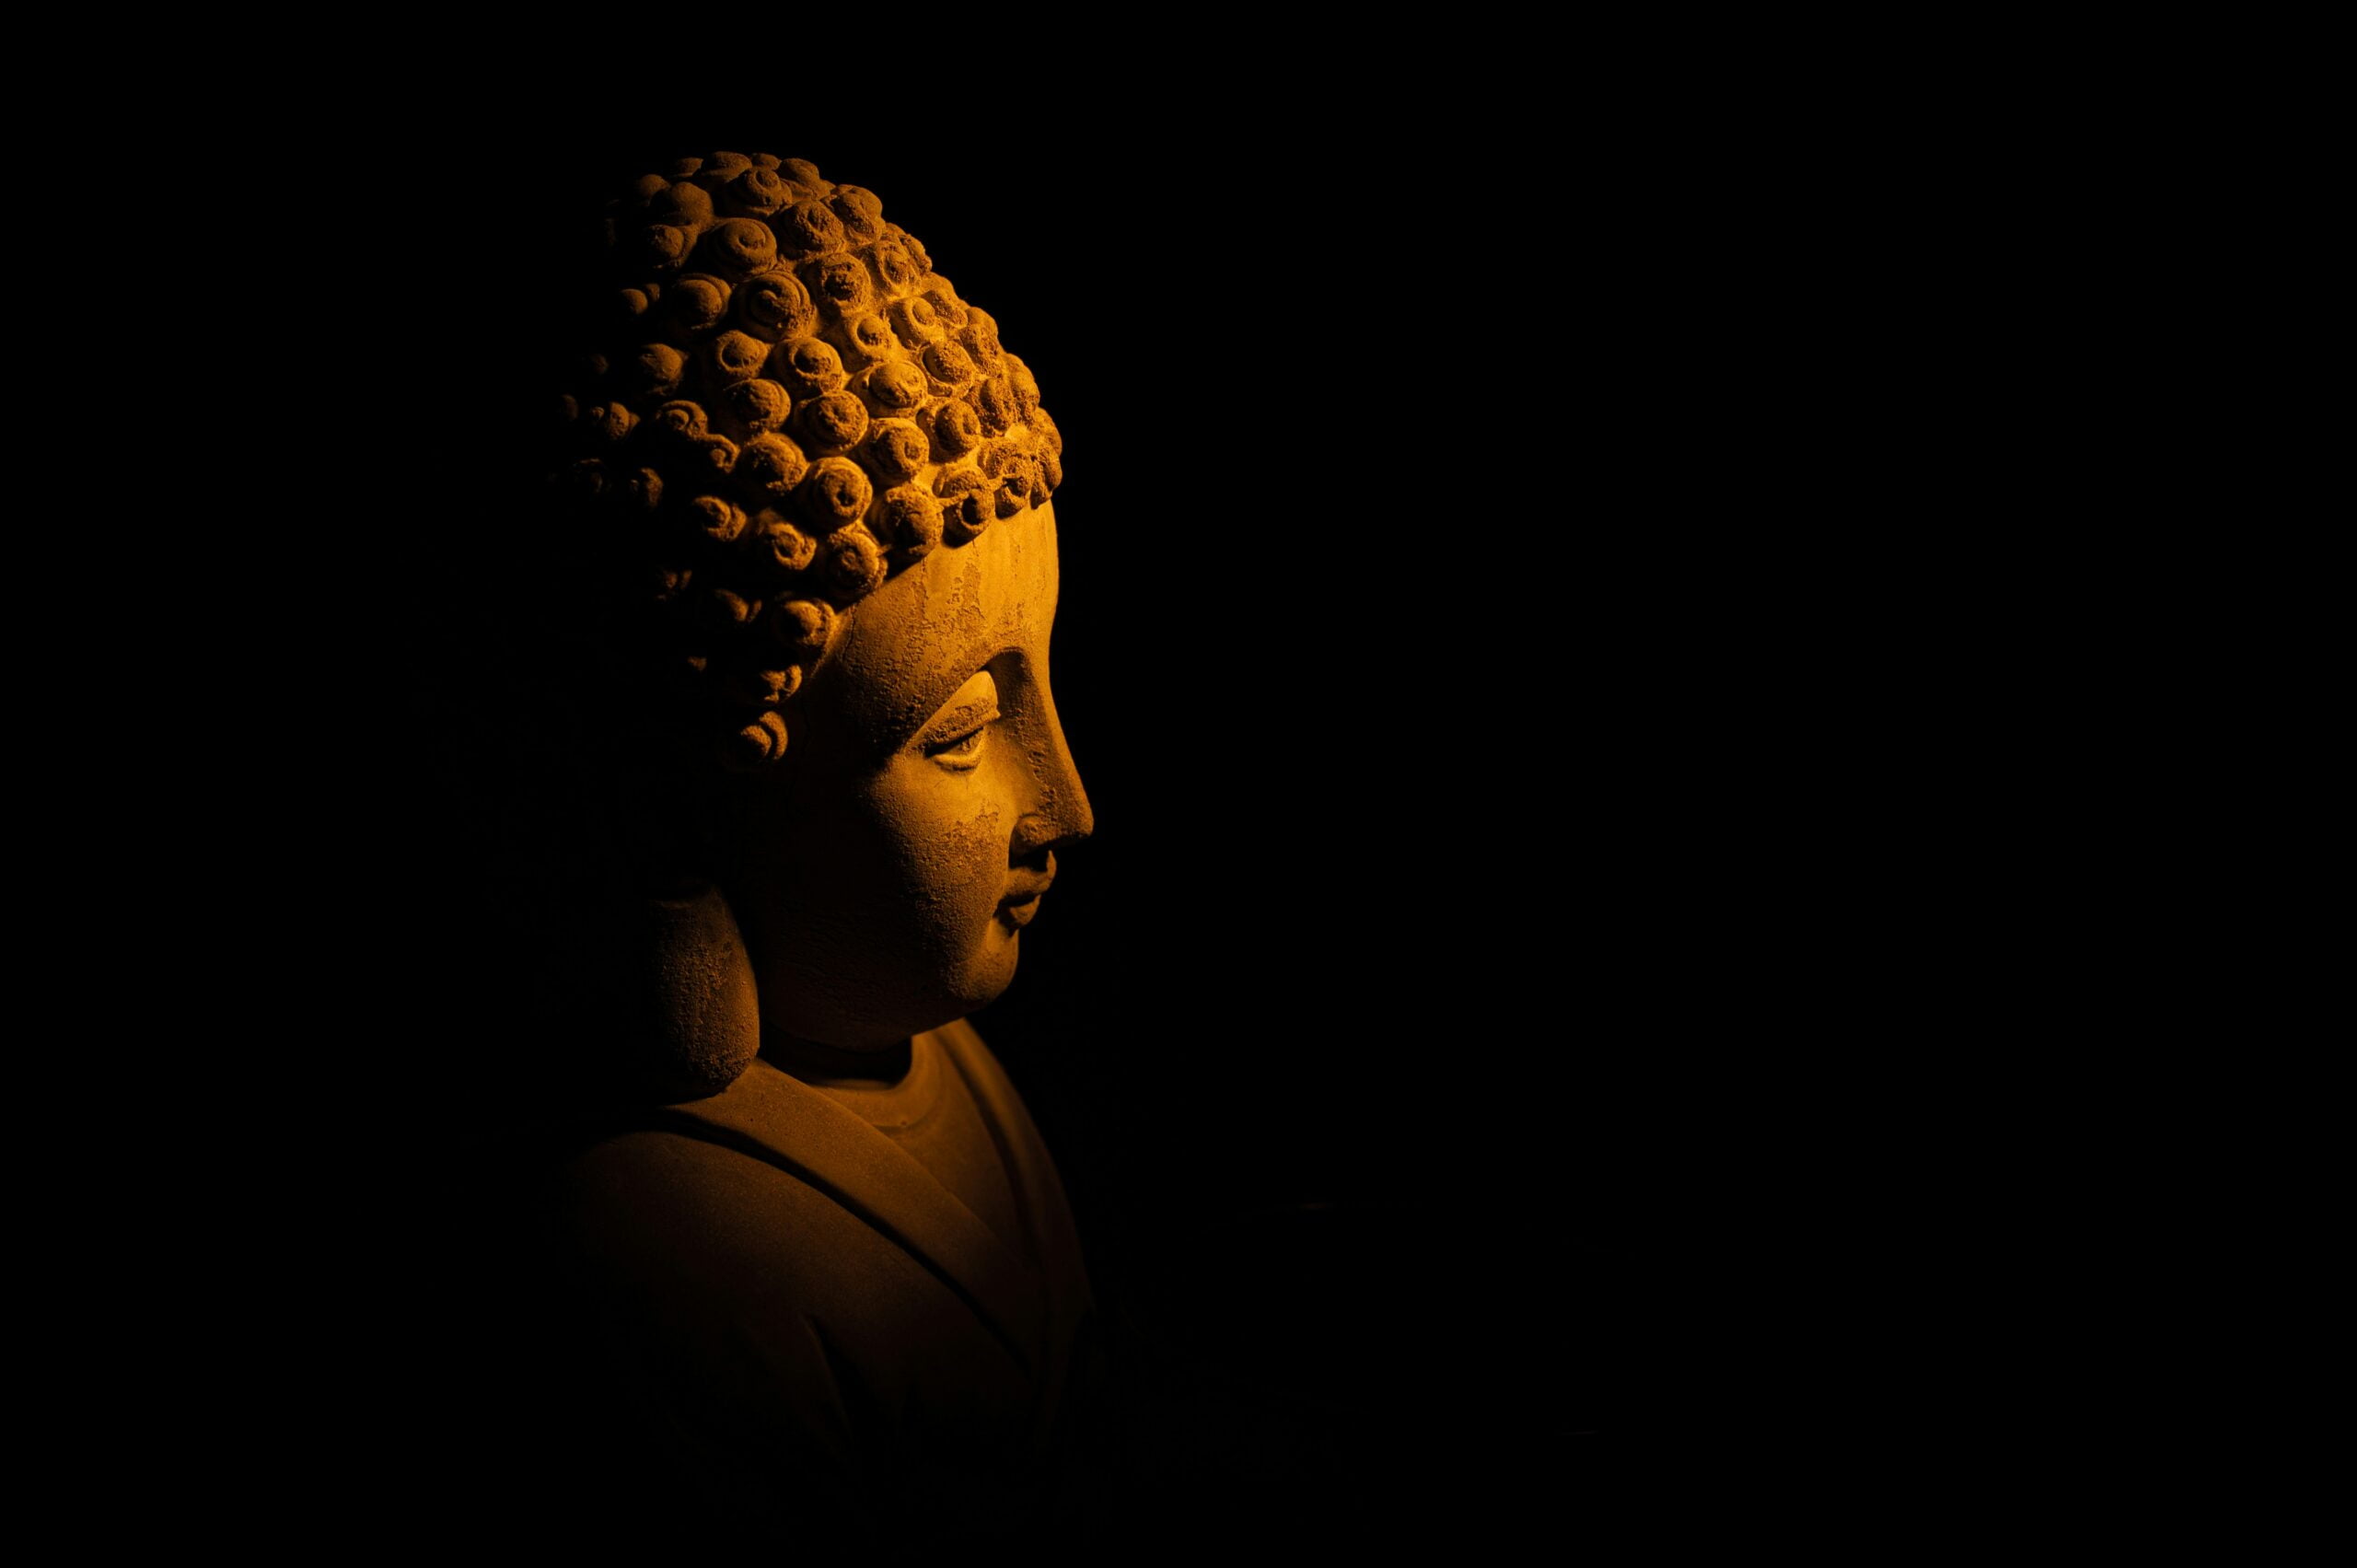 Soul in Buddhist Philosophy